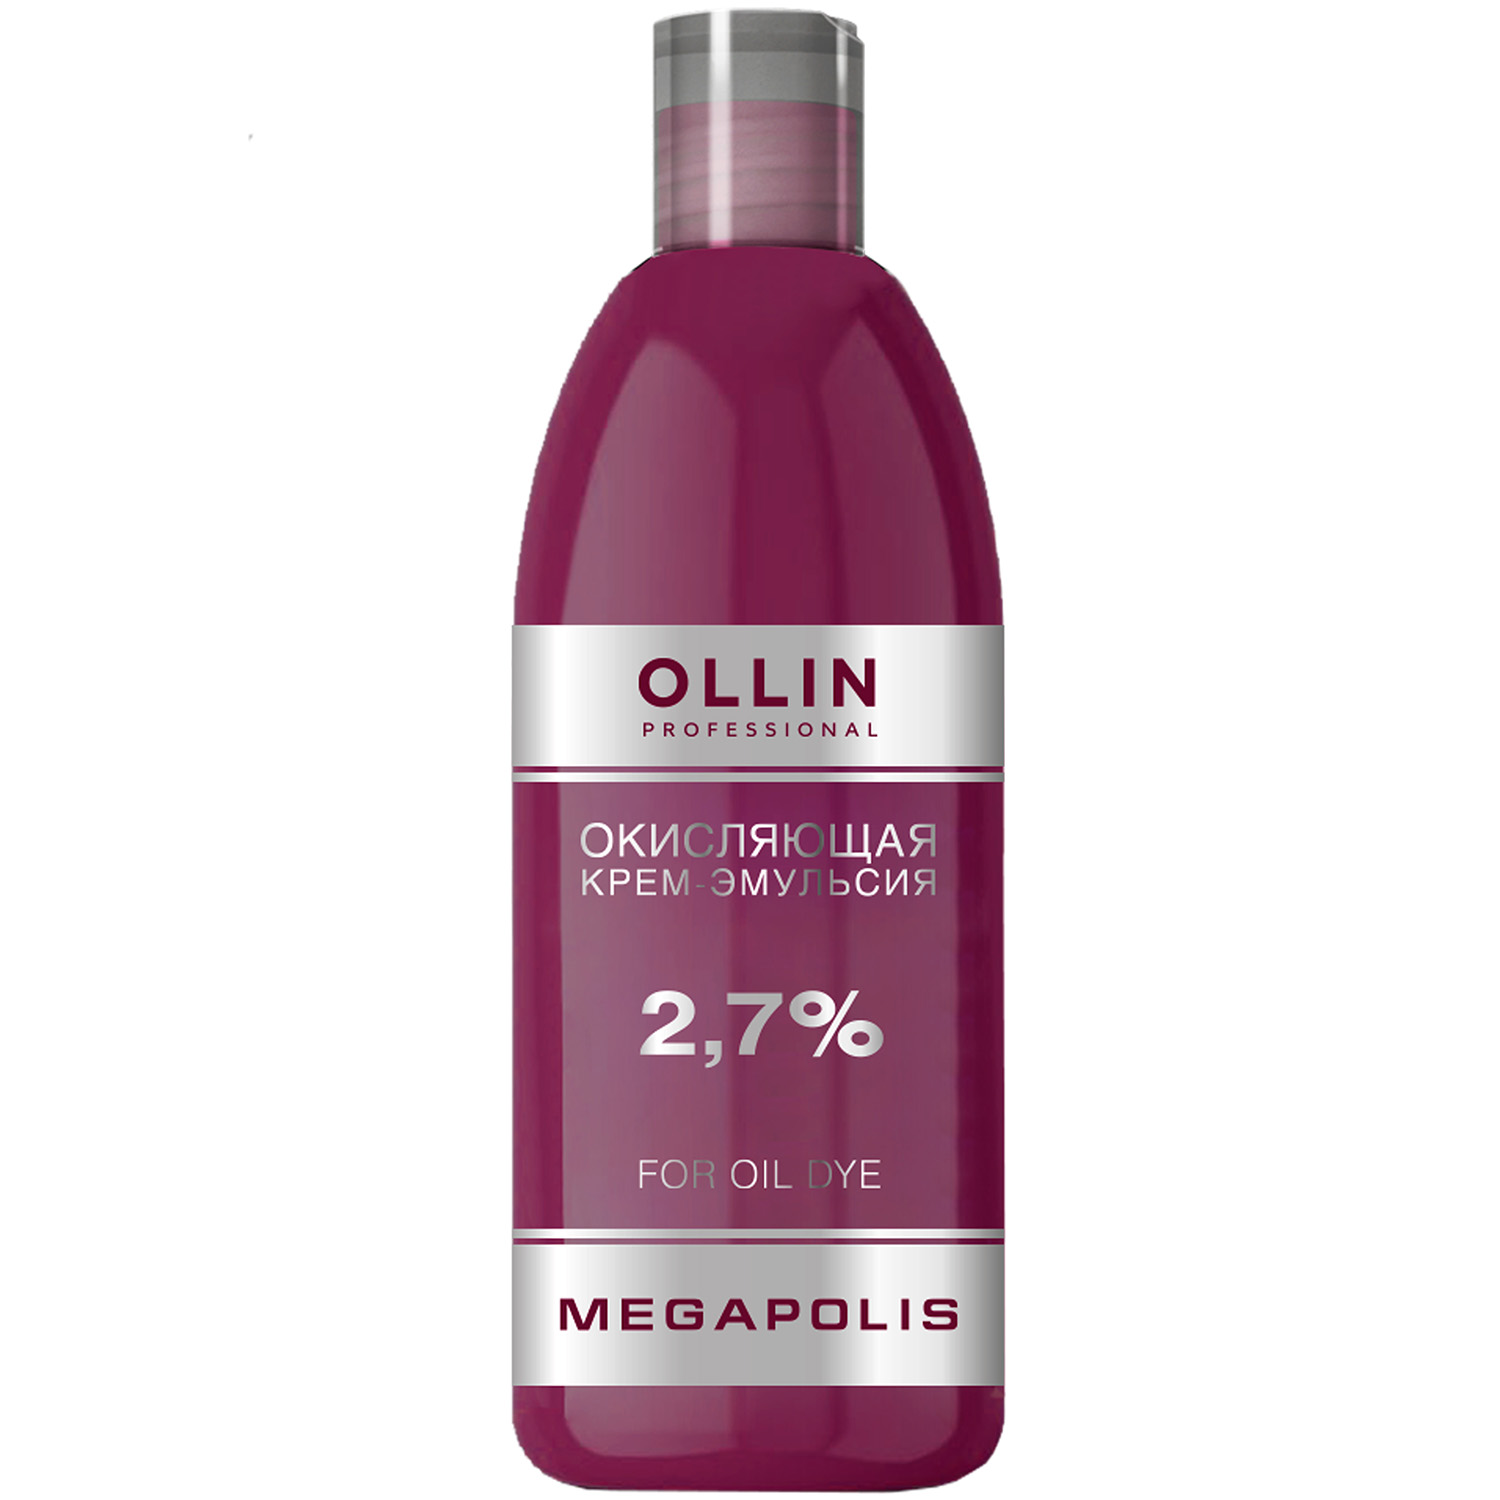 Ollin Professional Окисляющая крем-эмульсия 2,7%, 500 мл (Ollin Professional, Megapolis)